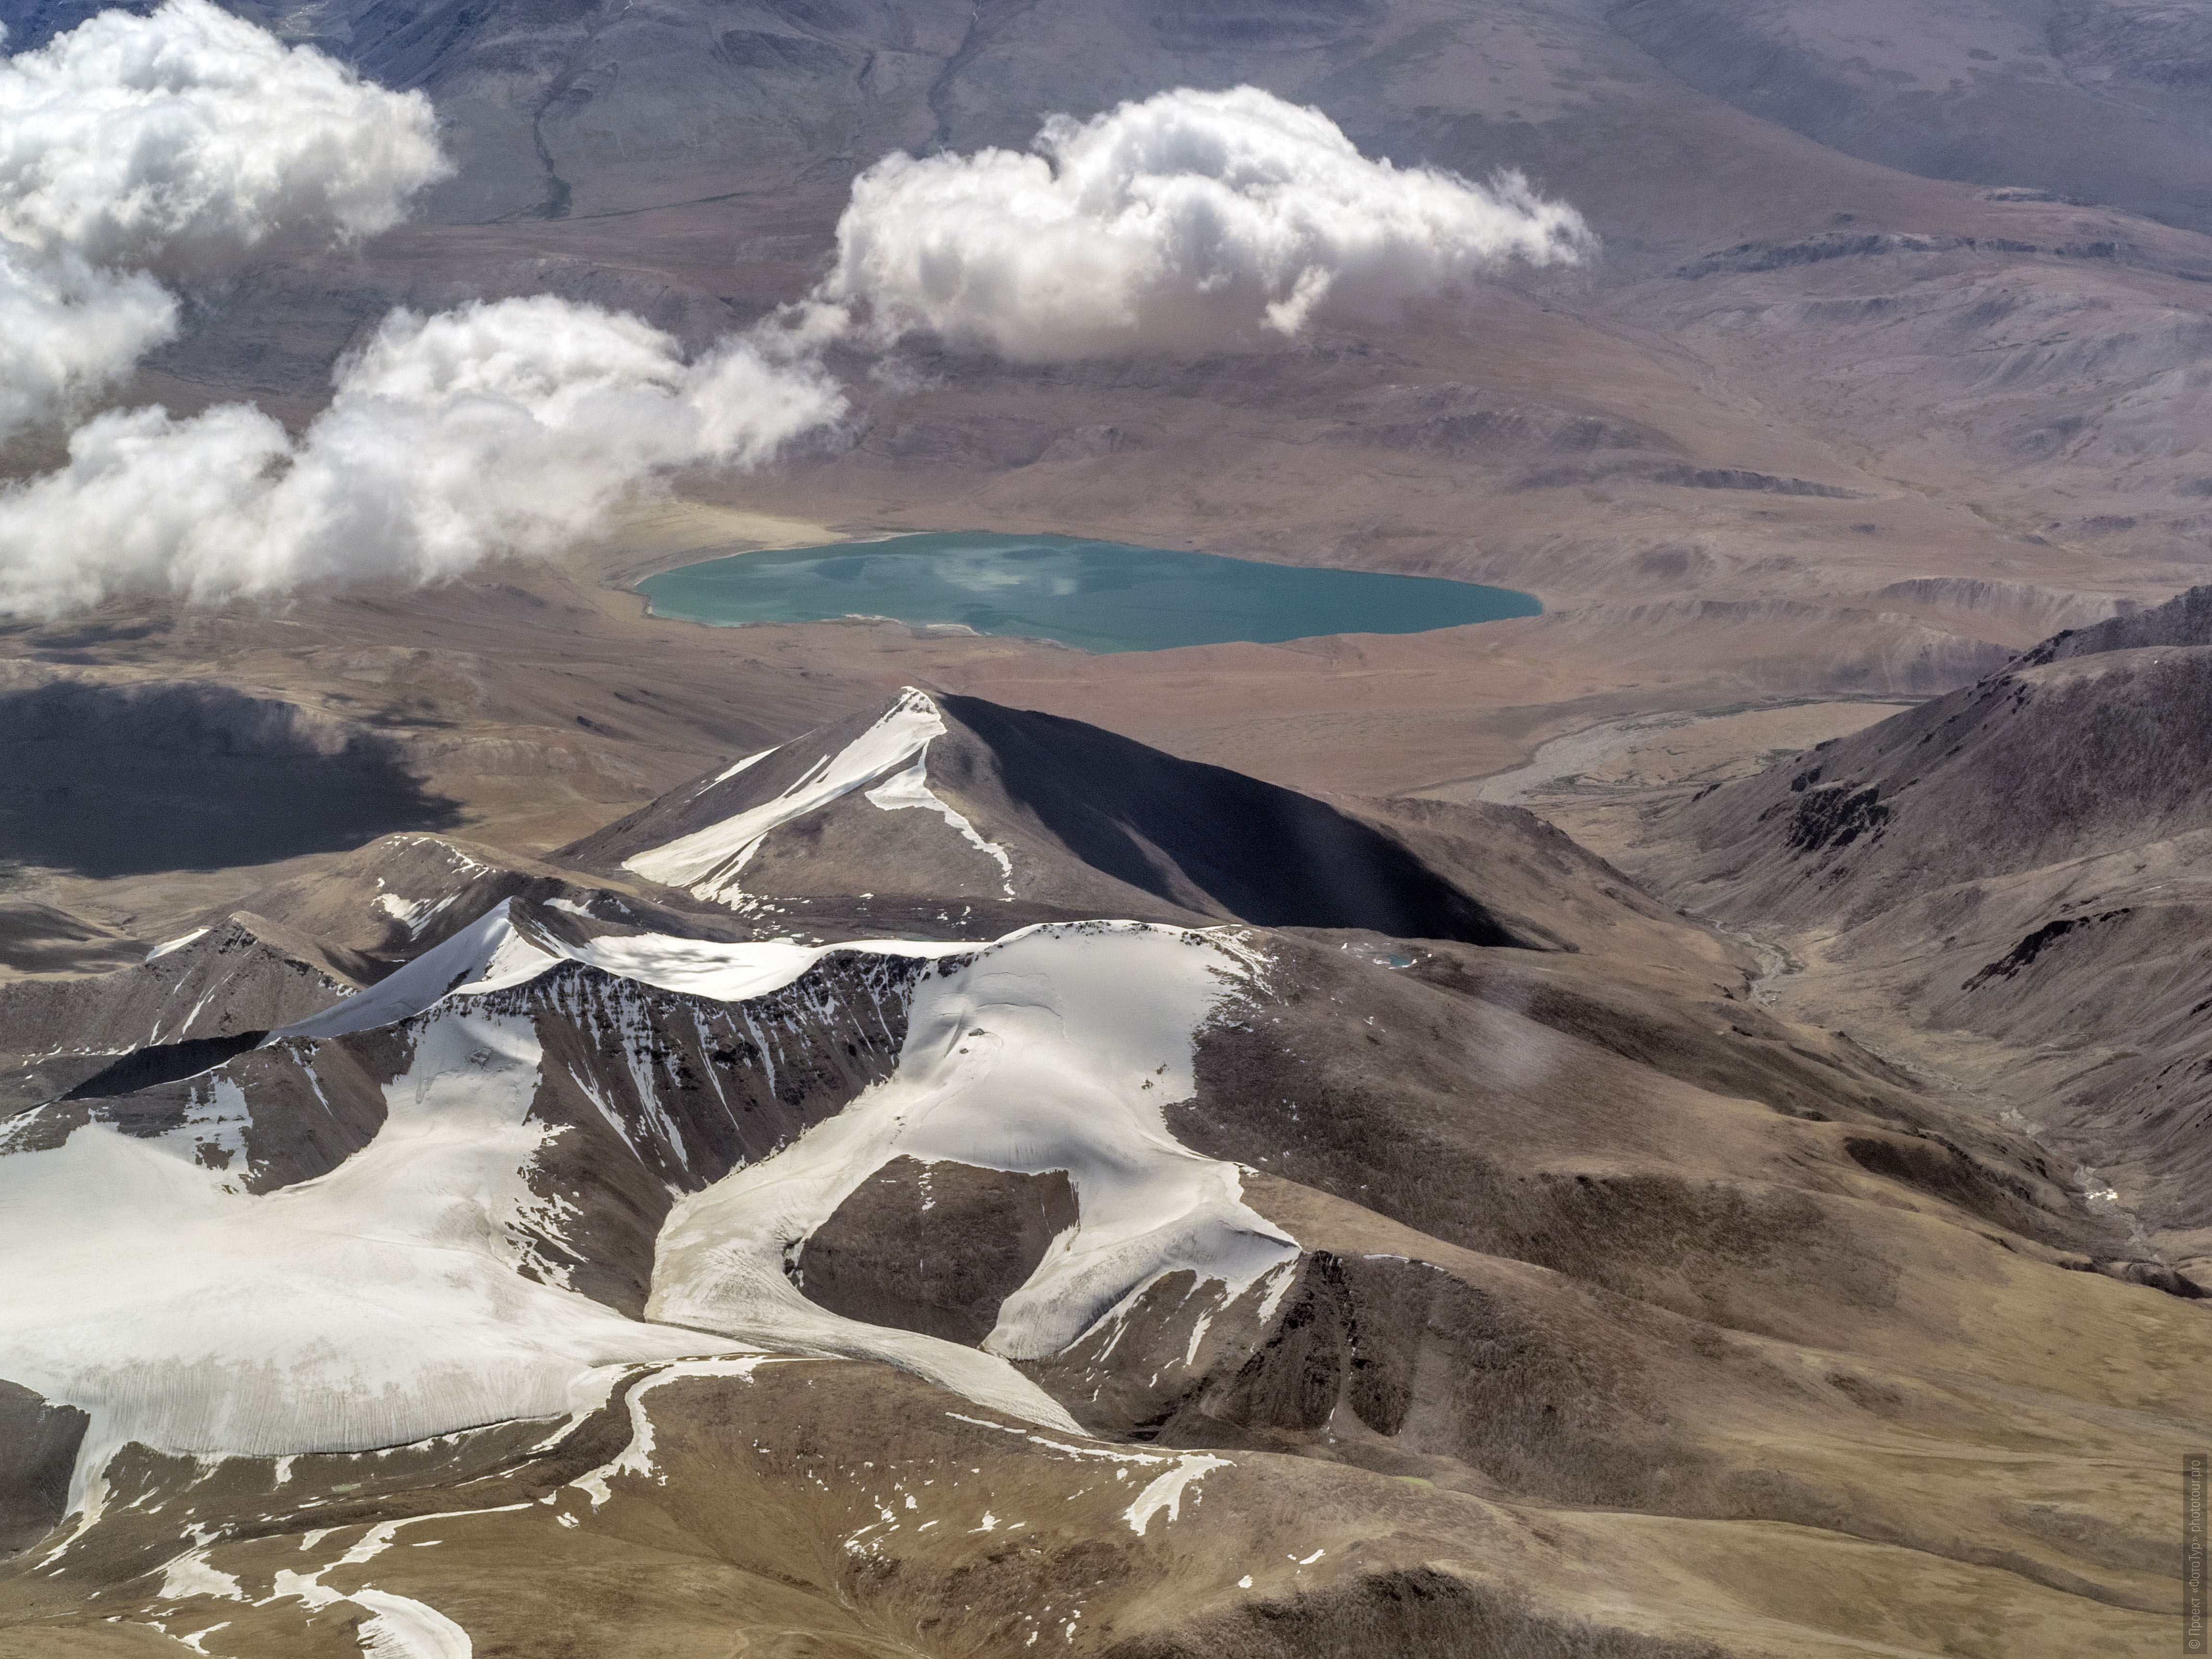 Lake Chiagar Tso, Ladakh women’s tour, August 31 - September 14, 2019.